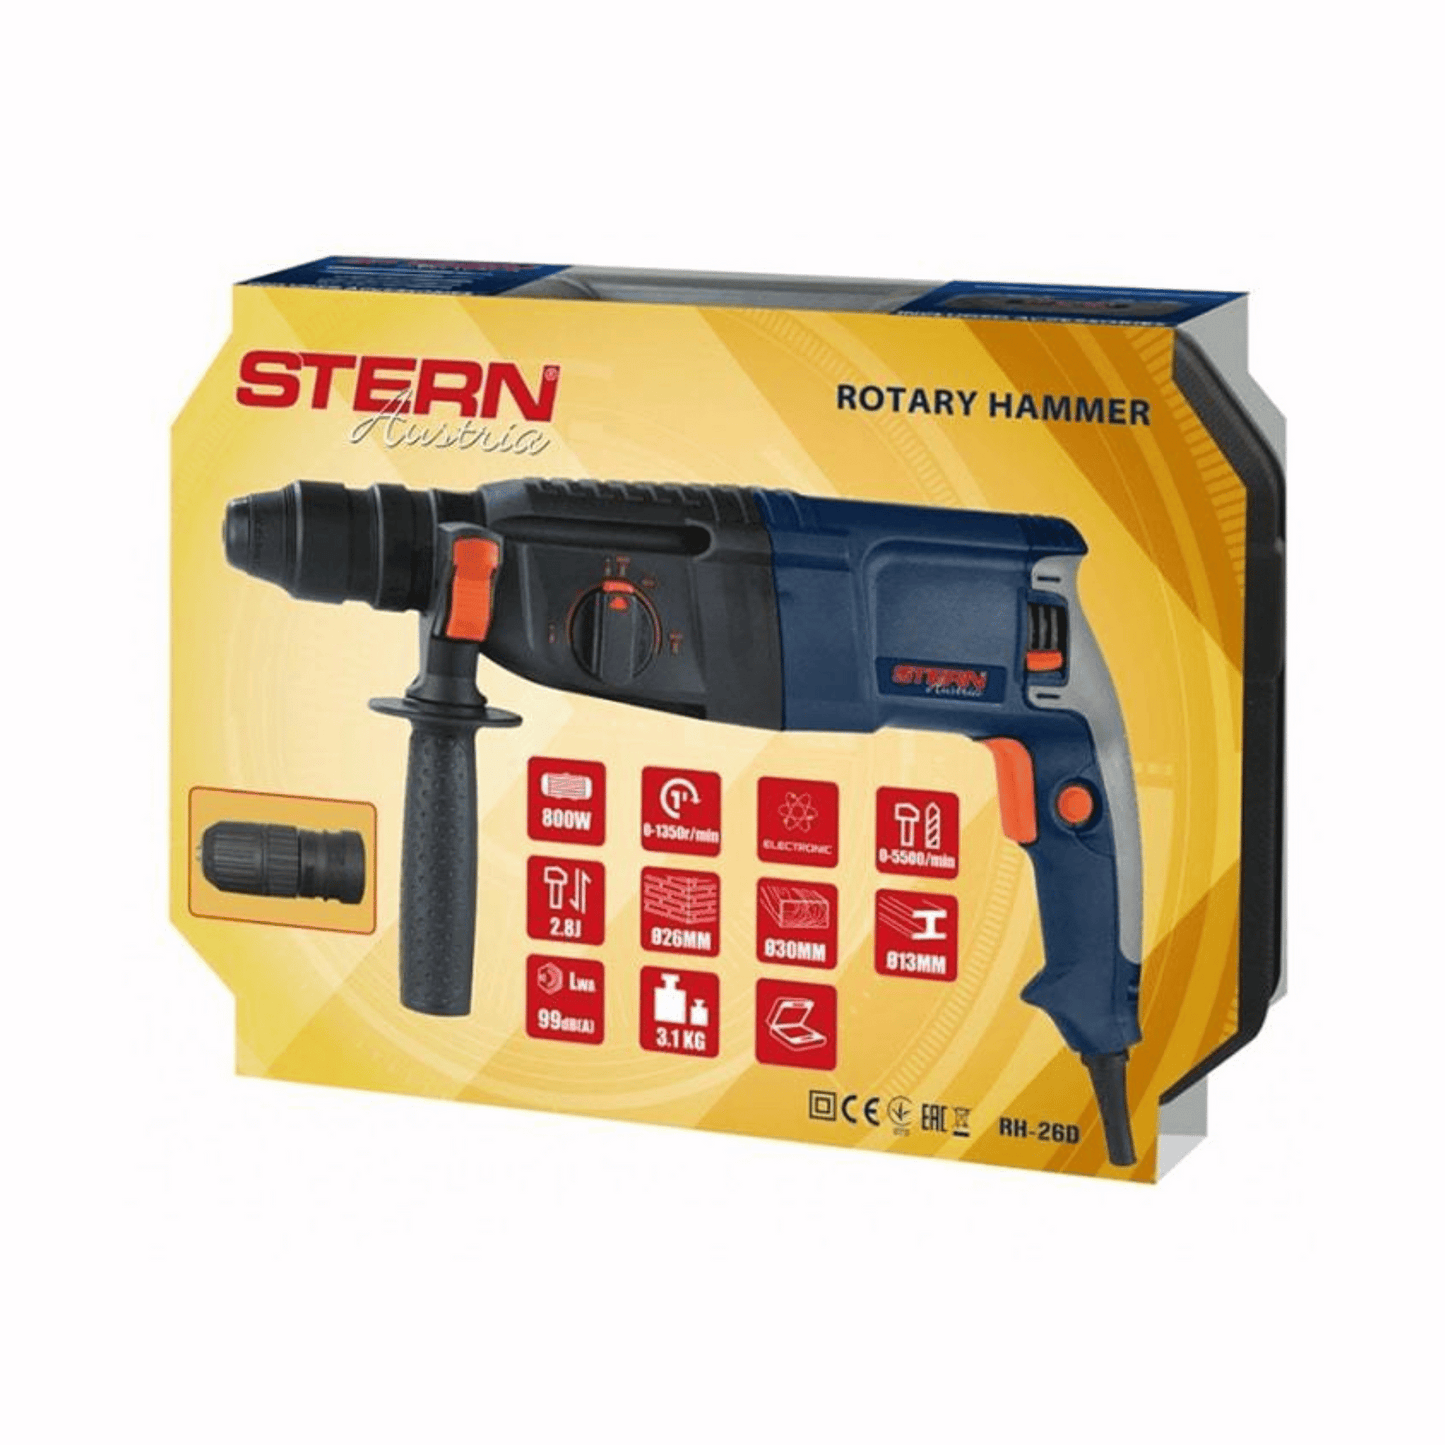 Stern Austria - Perforator - RH26D